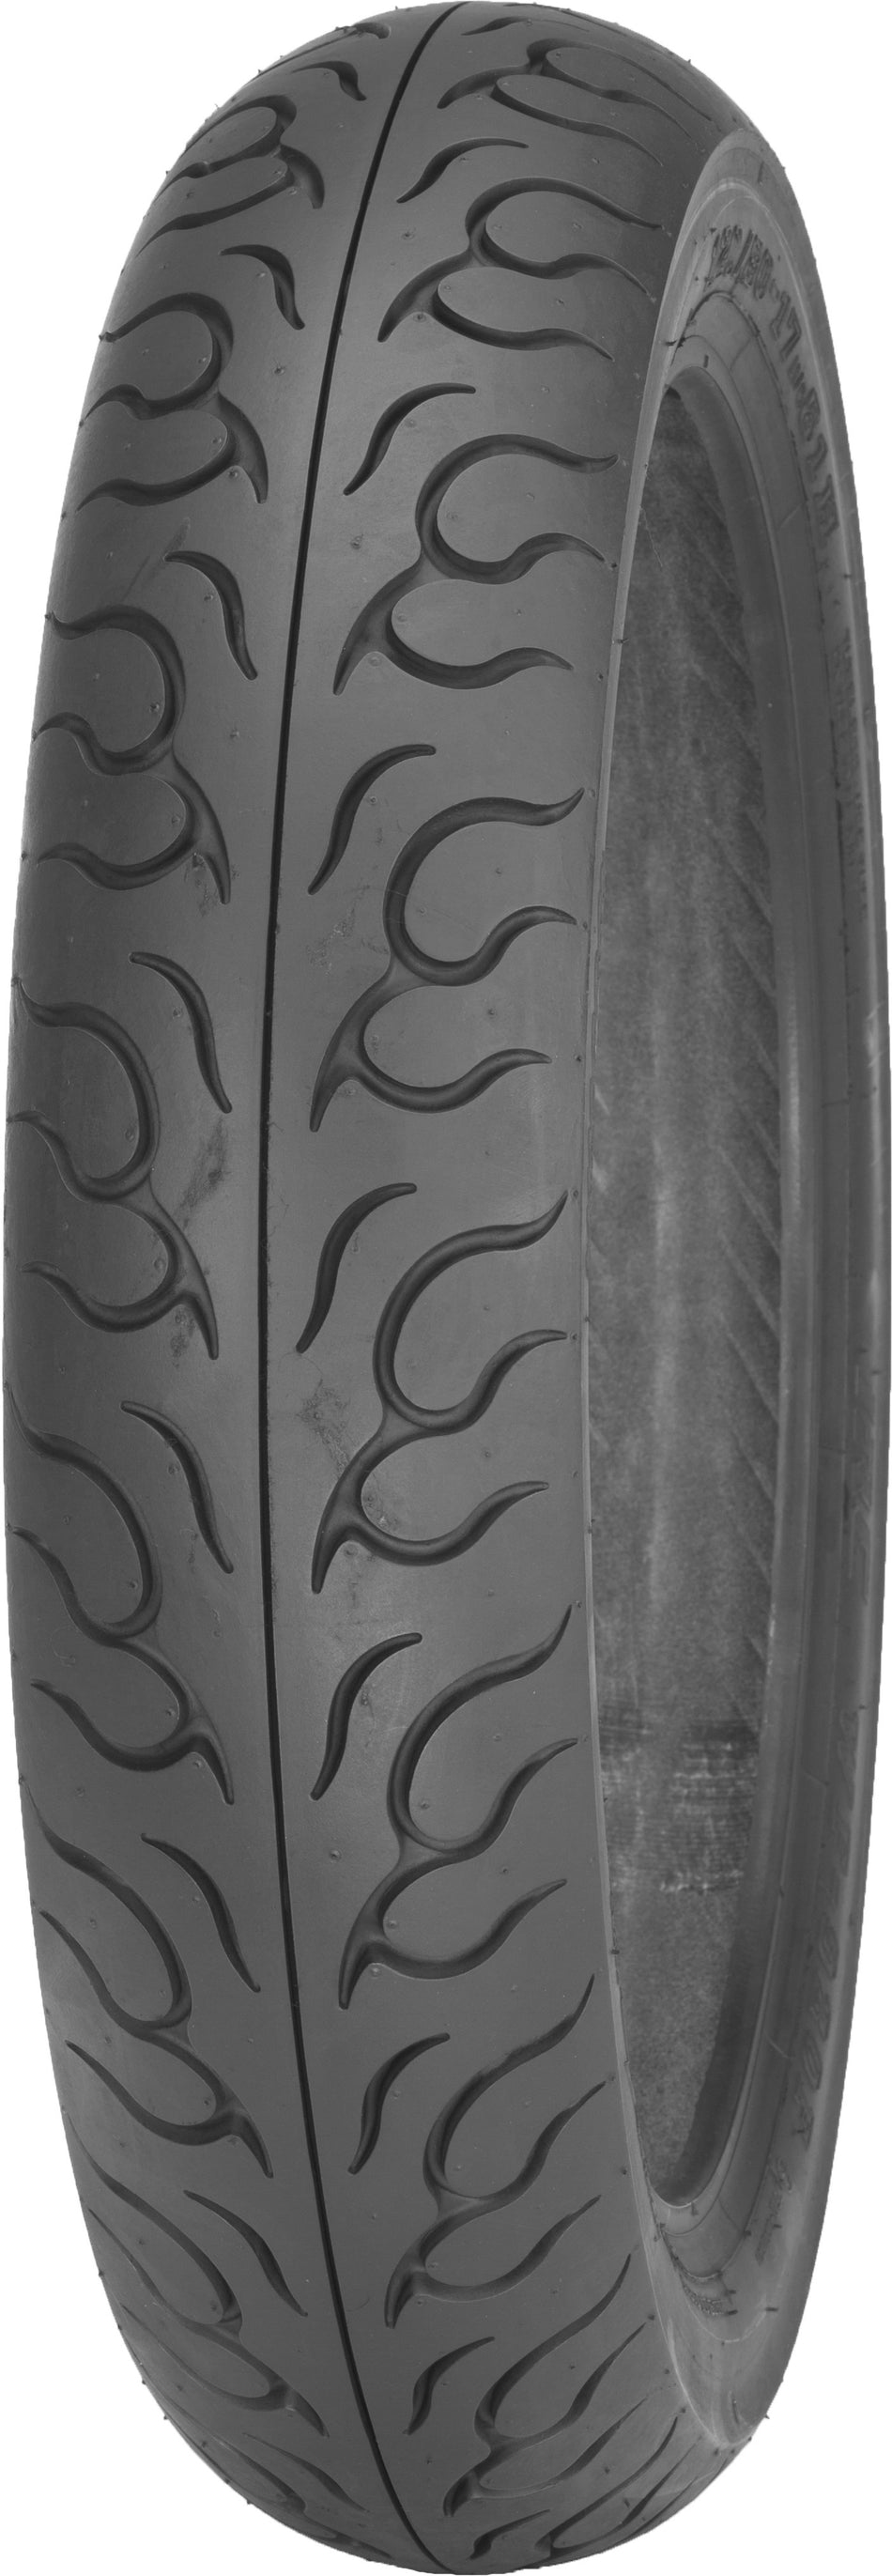 IRC Tire Wf-920 Front 110/90-19 62h Bias 310628